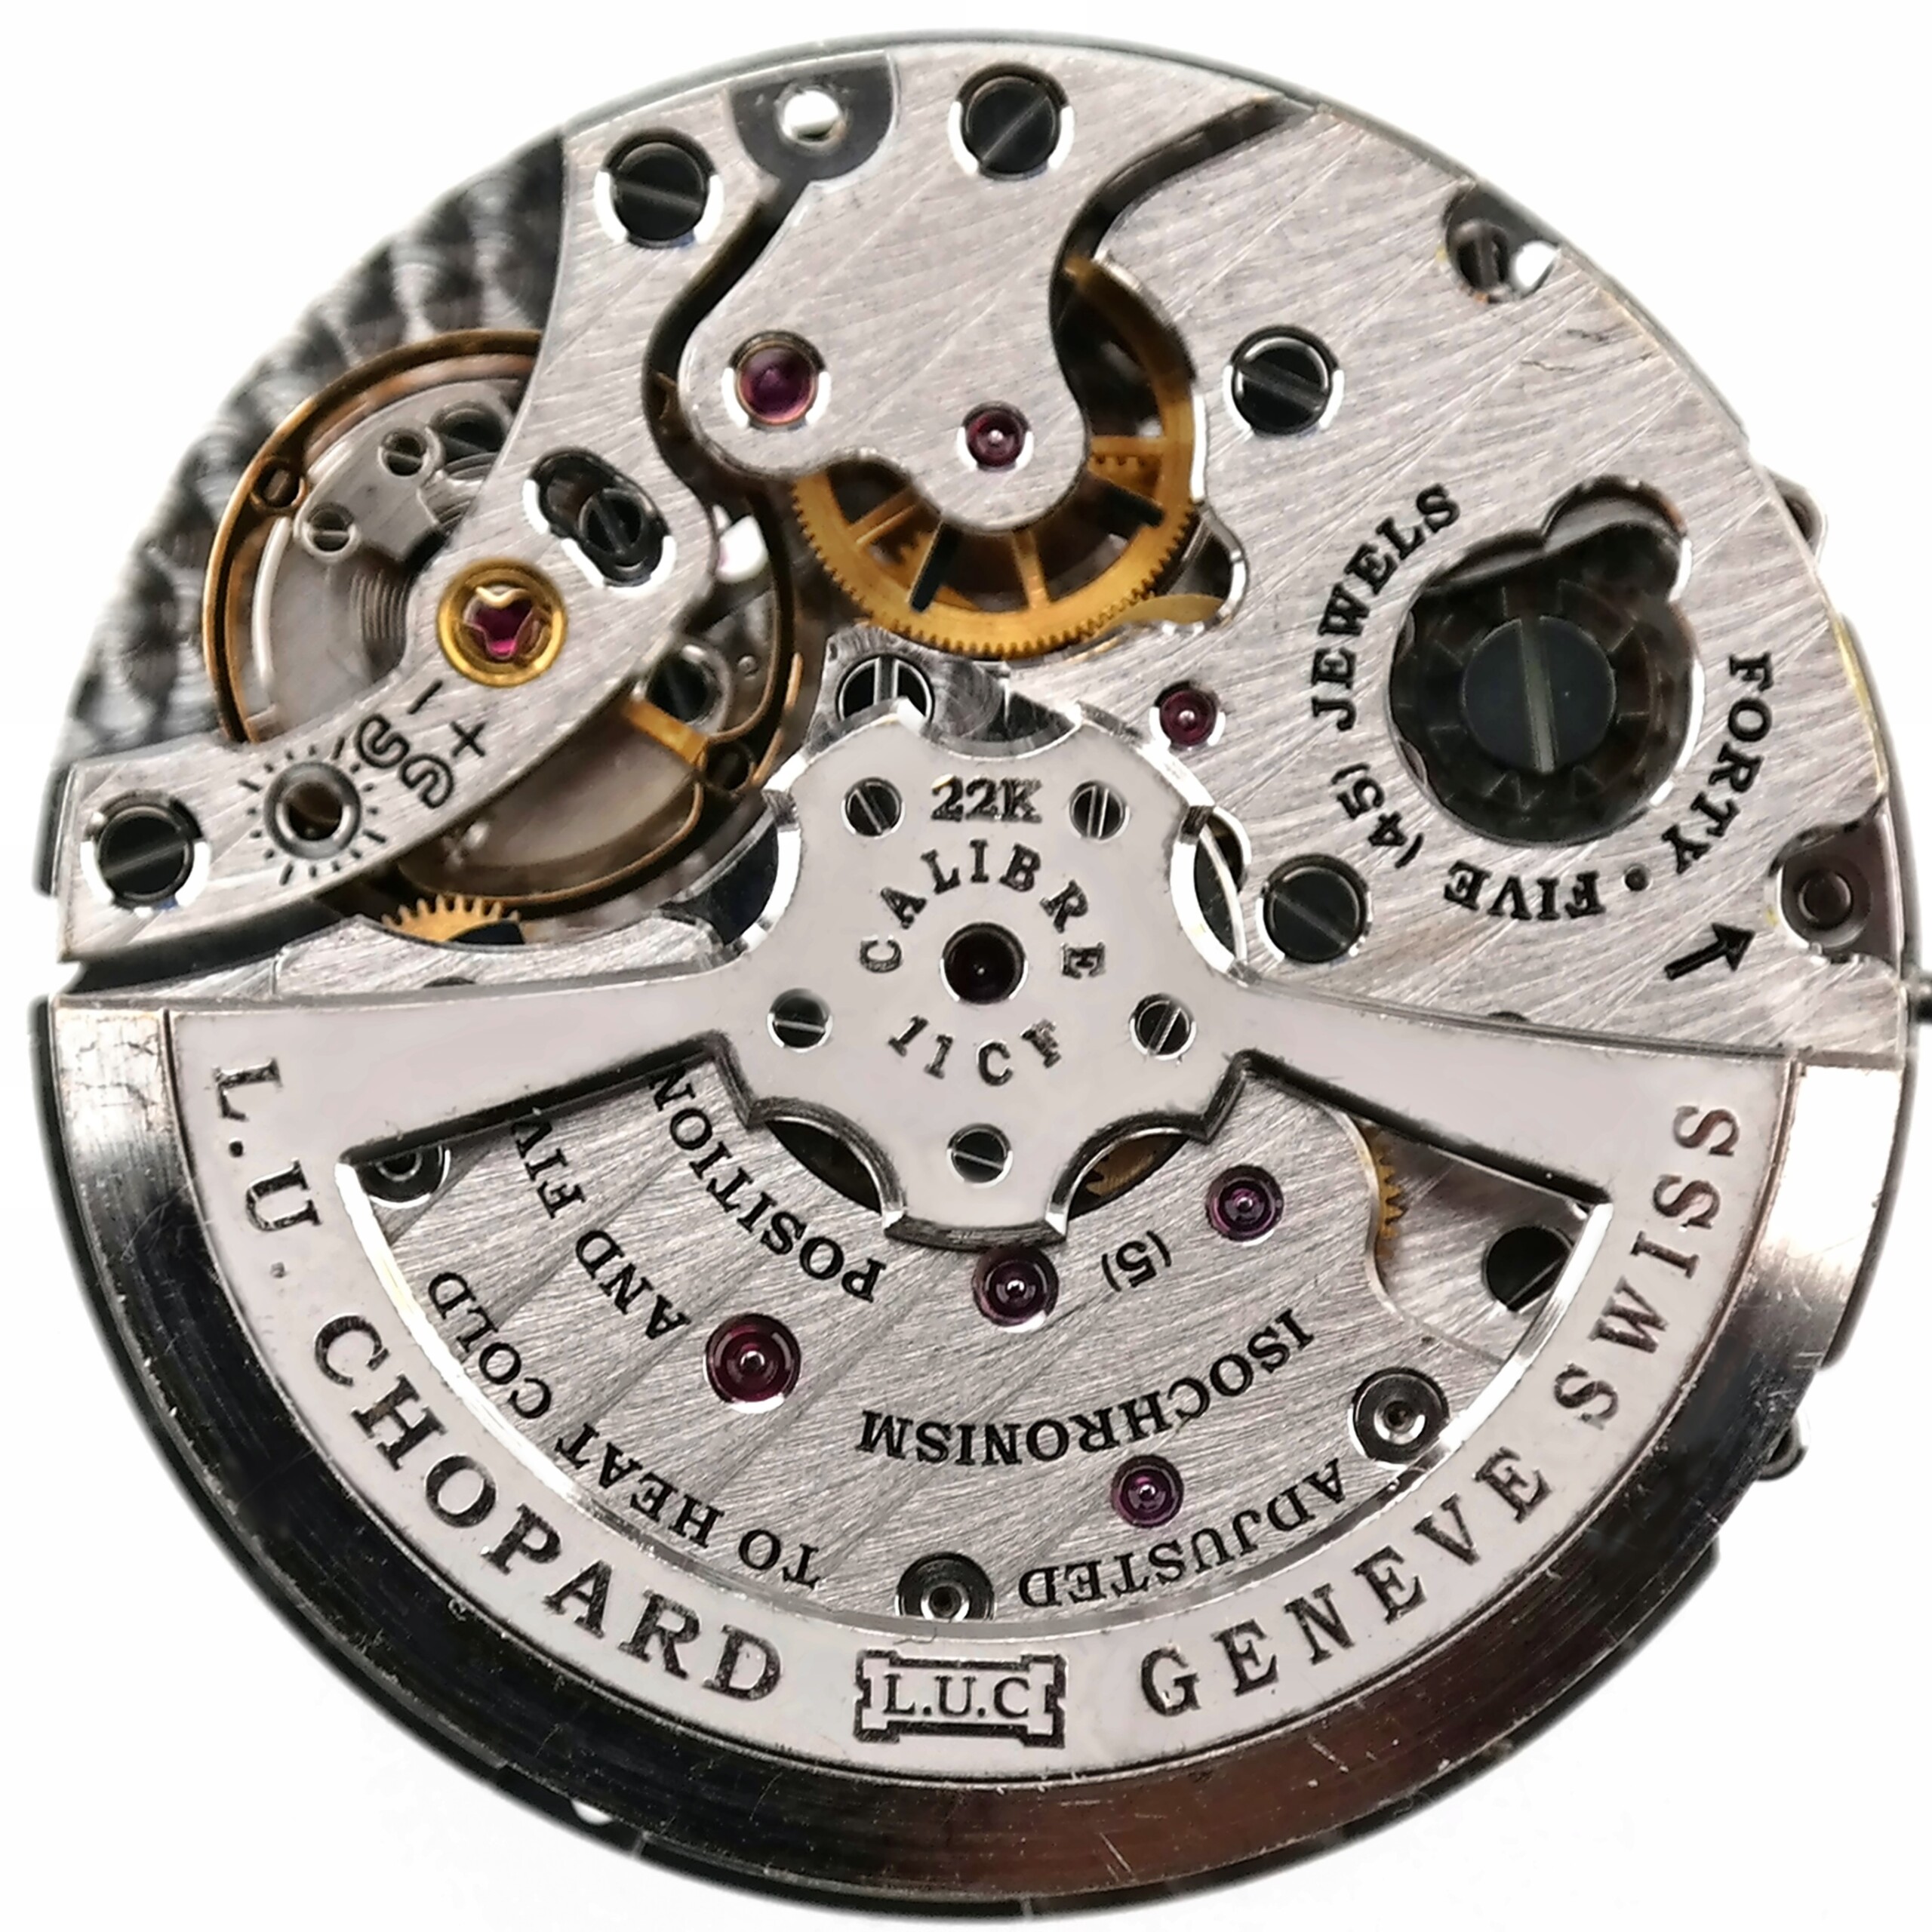 chopard caliber 11 cf automatic column wheel chronograph flyback chronometer